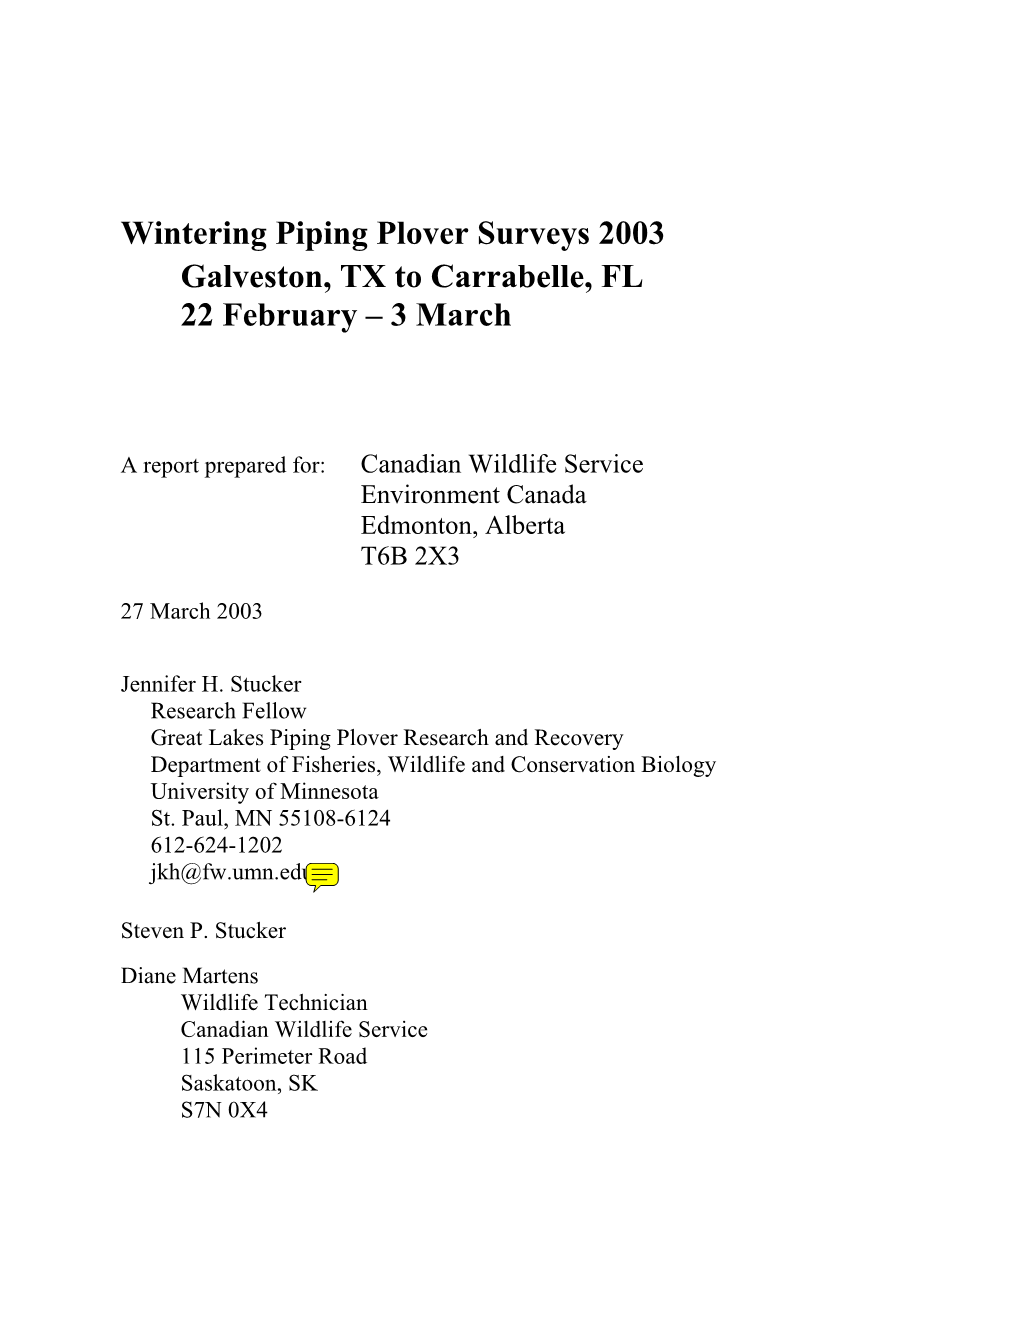 Wintering Piping Plover Surveys 2003: Galveston, TX to Carrabelle, FL, 22